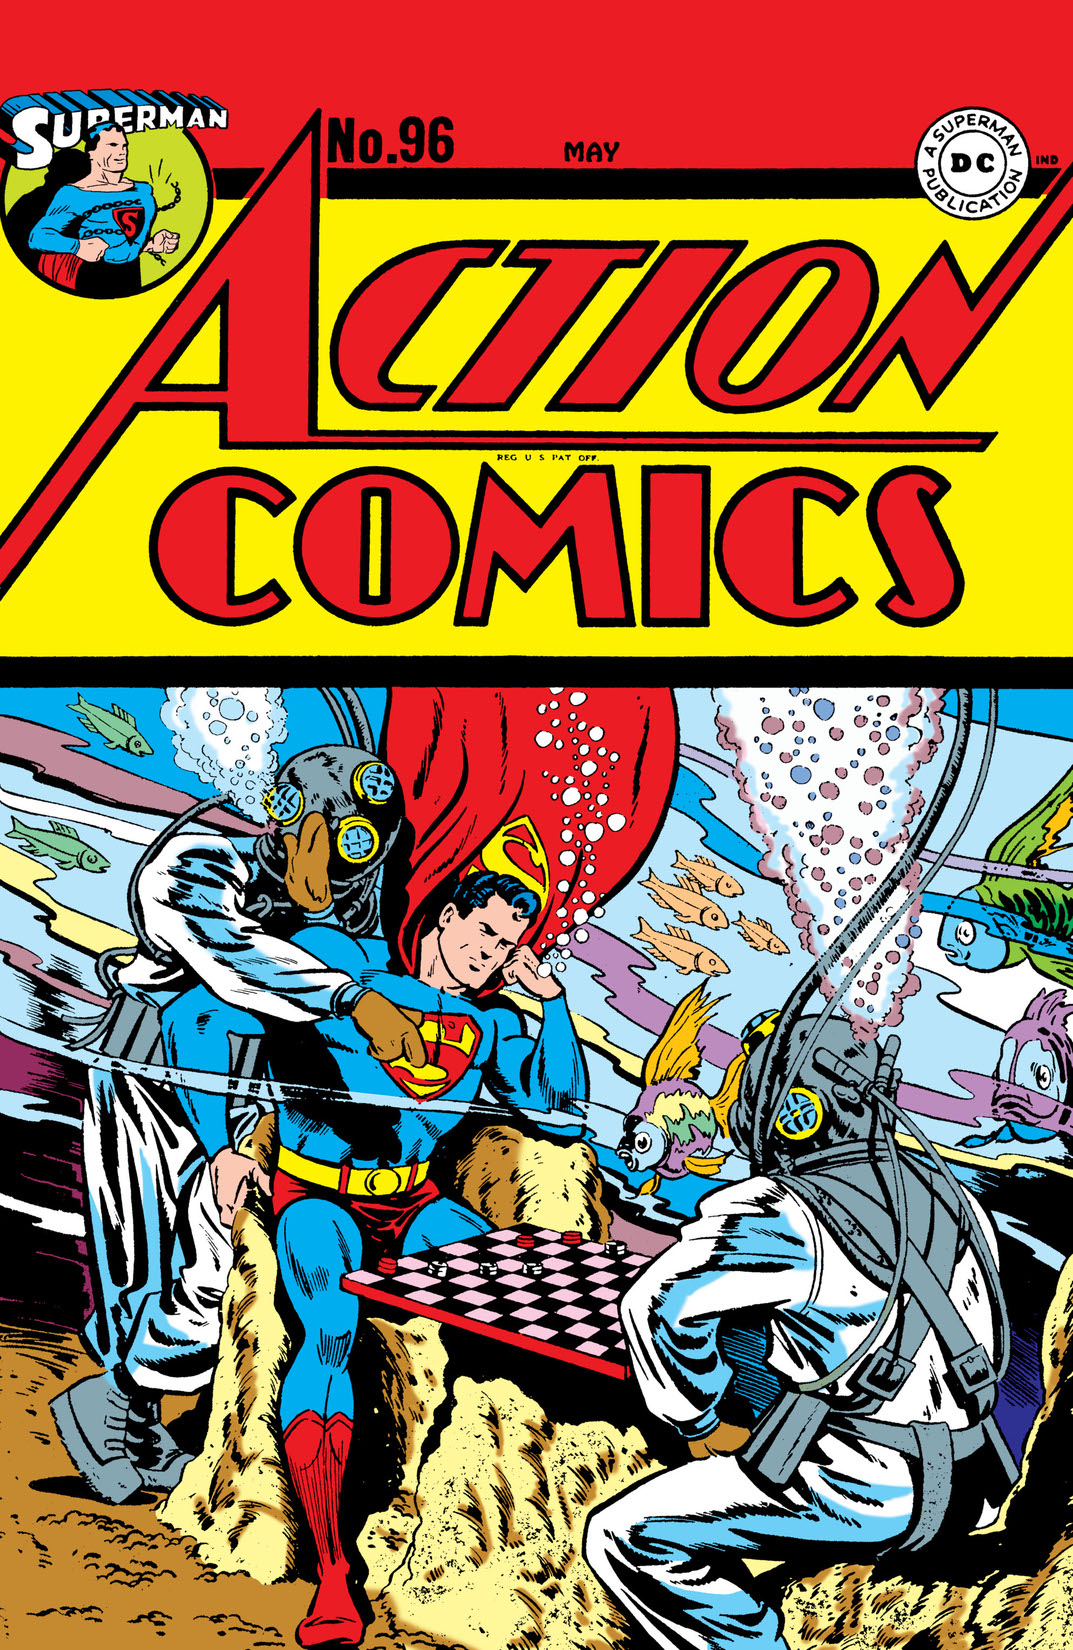 Action Comics (1938-) #96 preview images